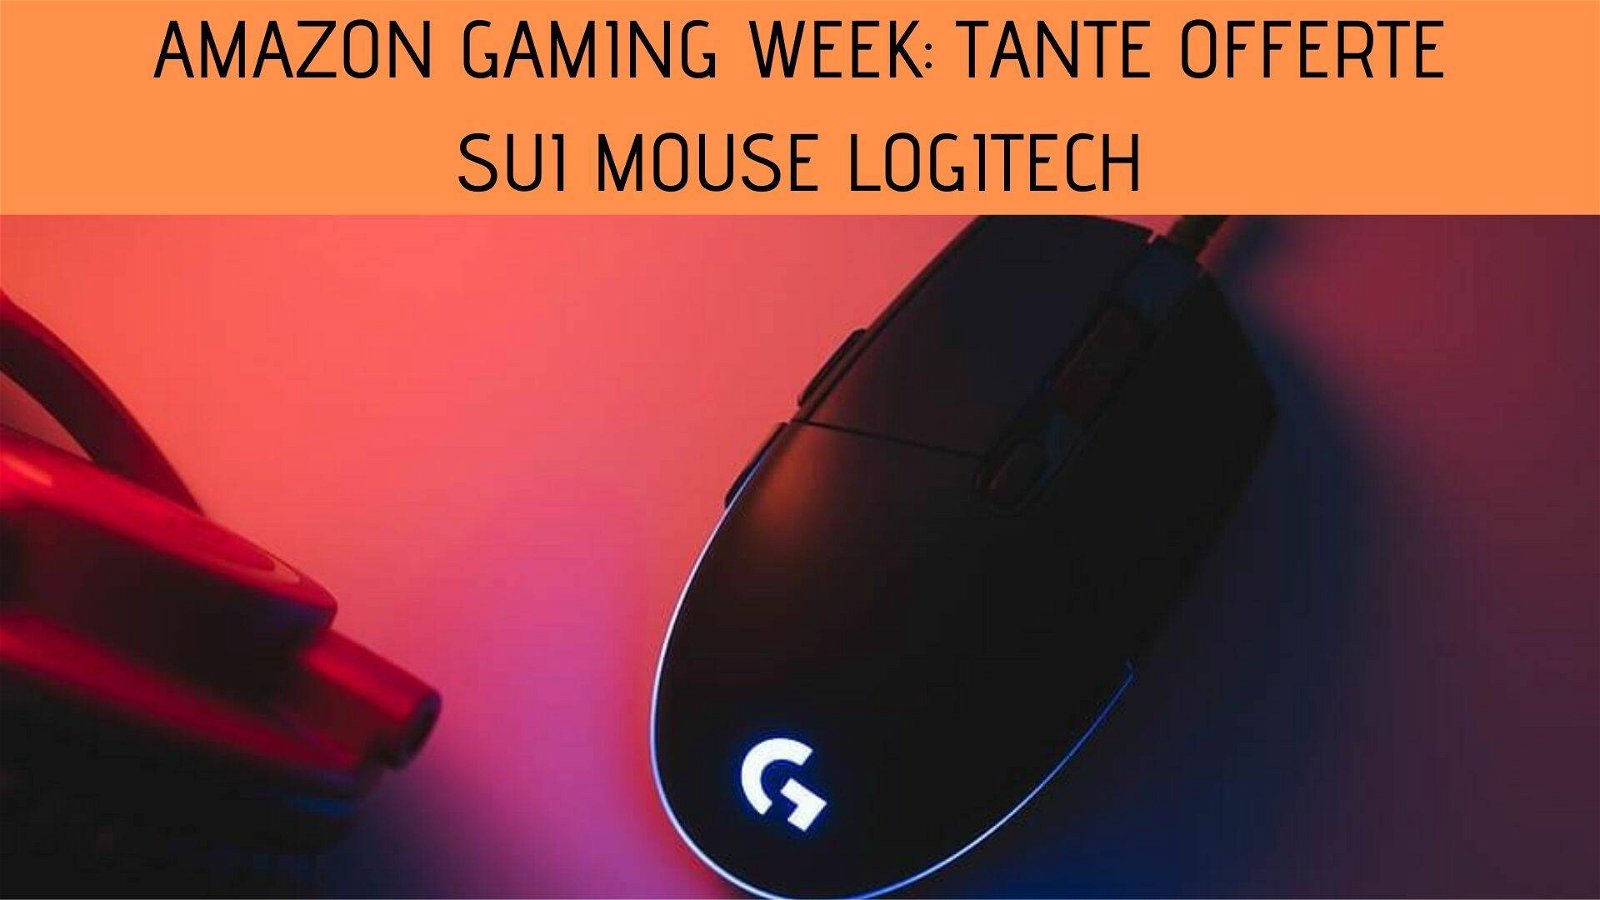 Immagine di Amazon Gaming Week: tante offerte sui mouse Logitech